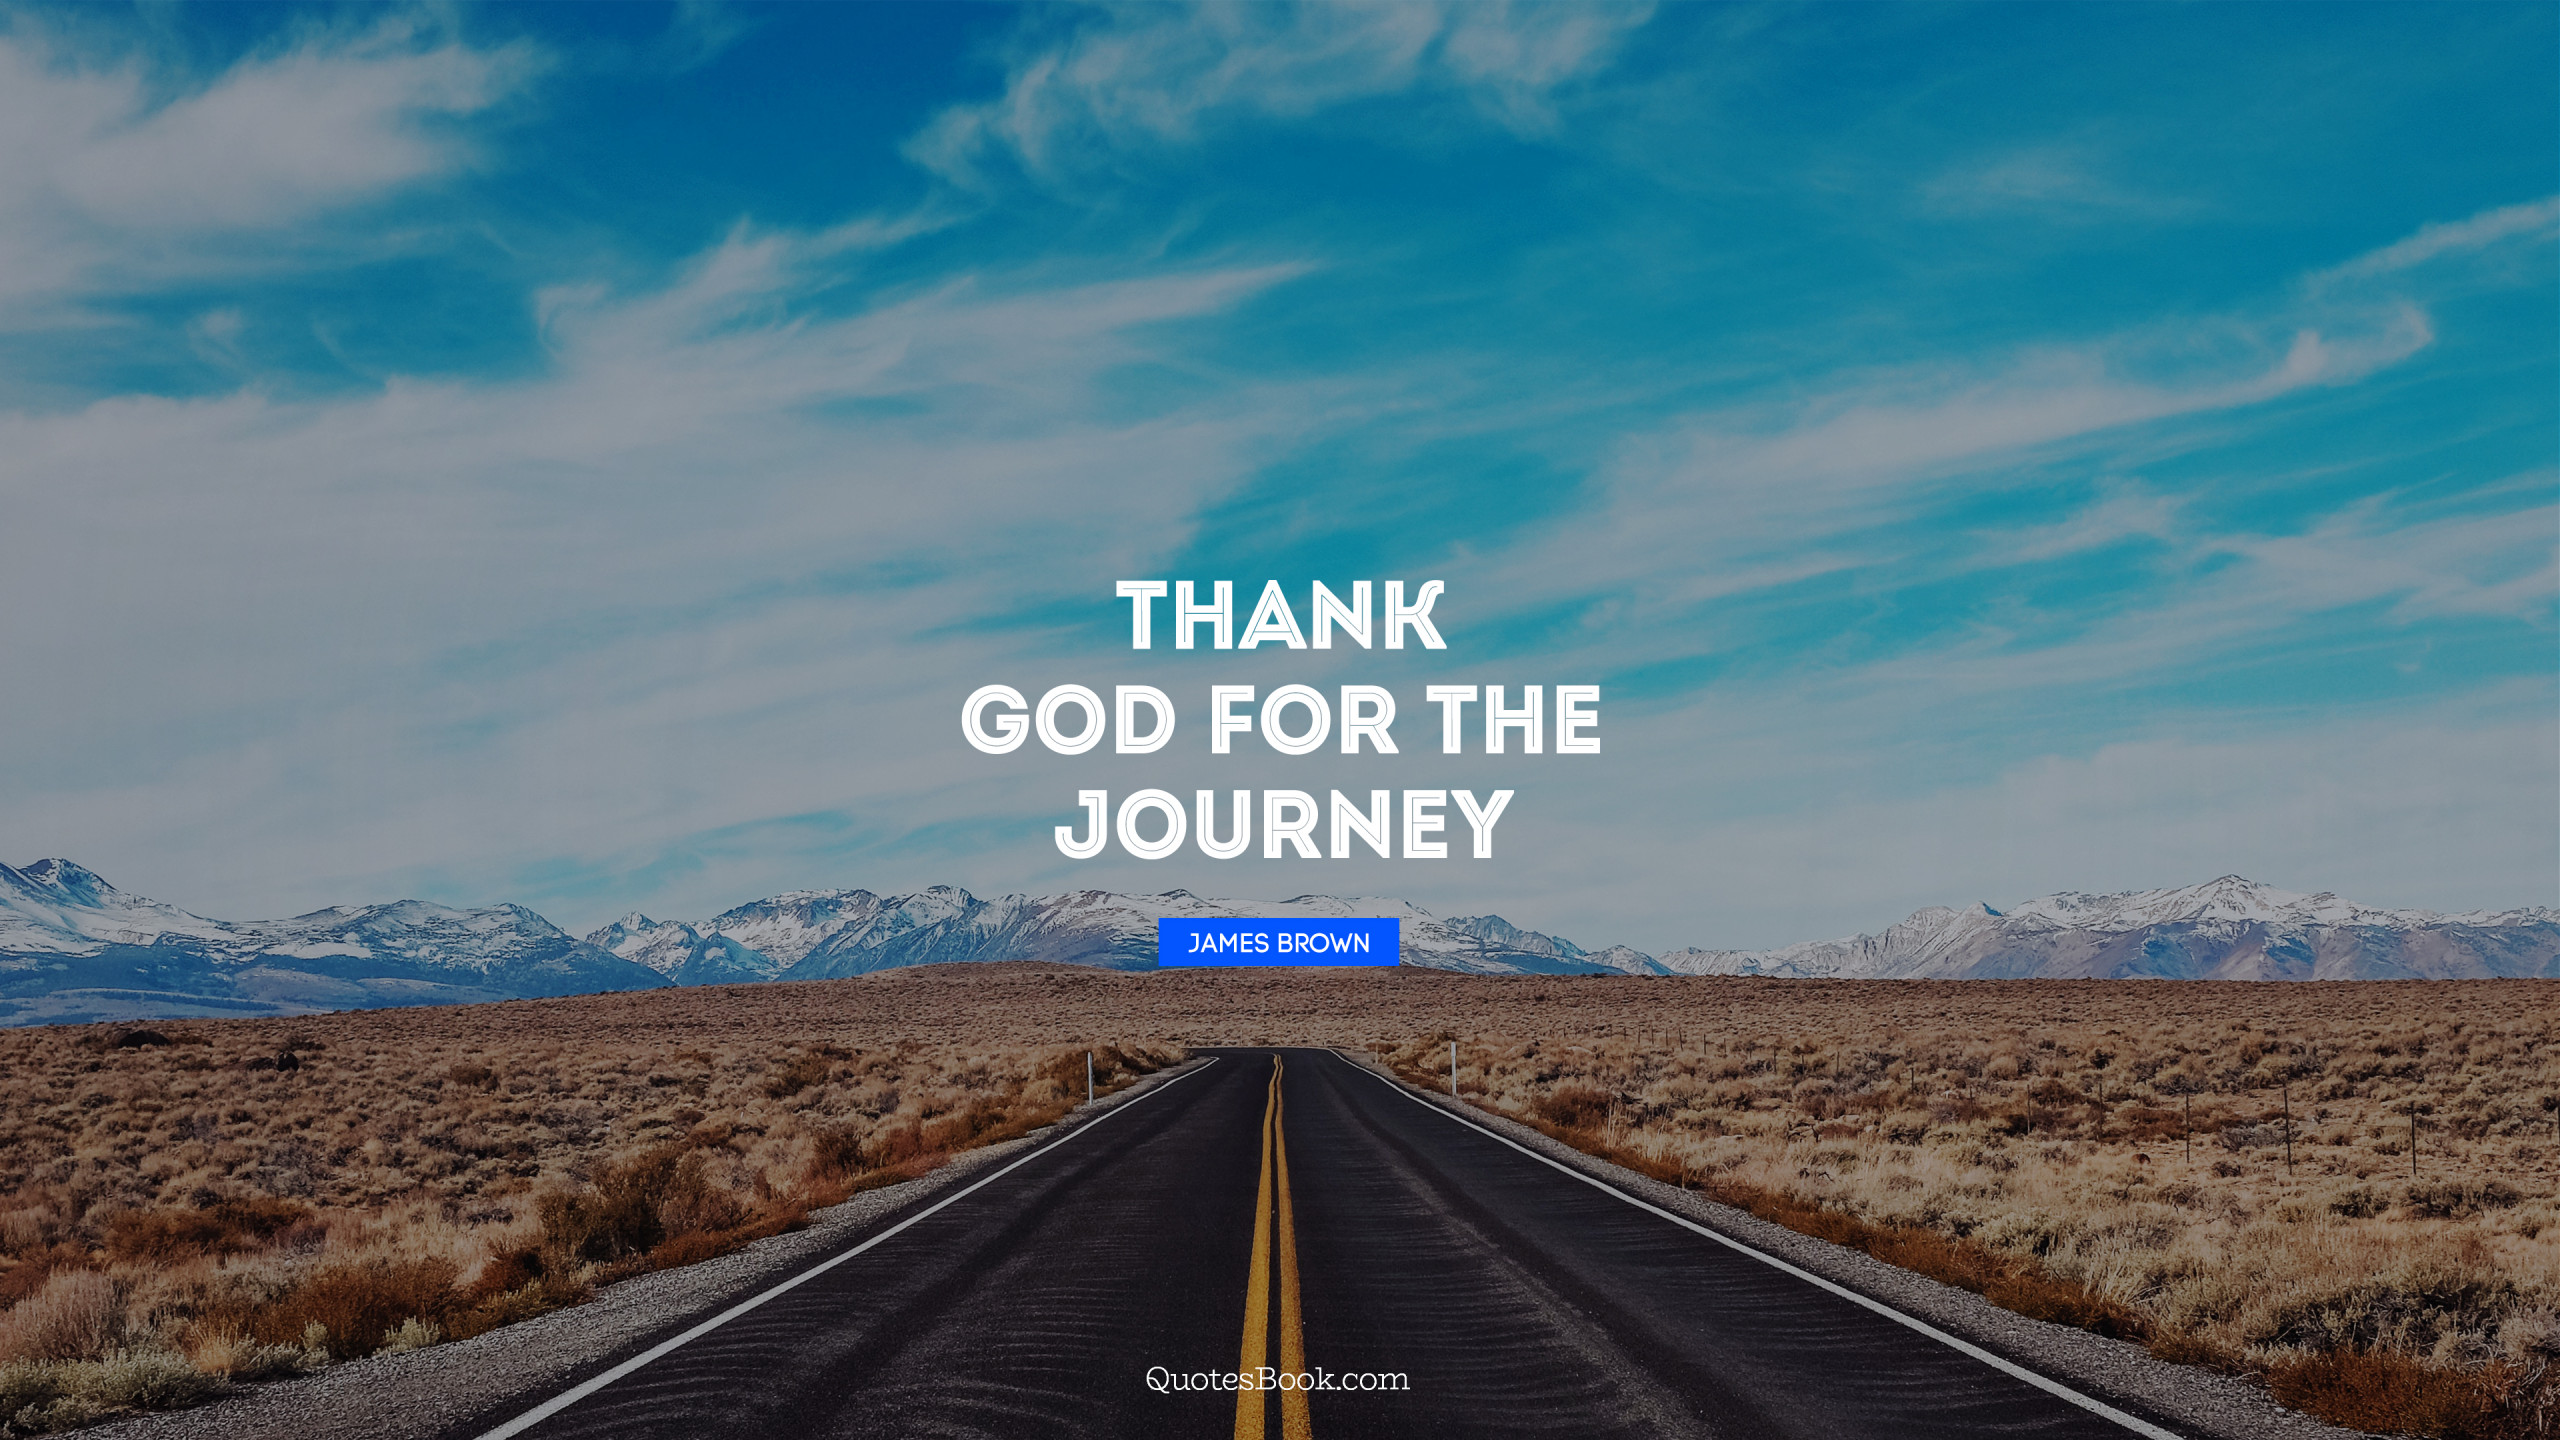 god's journey for me